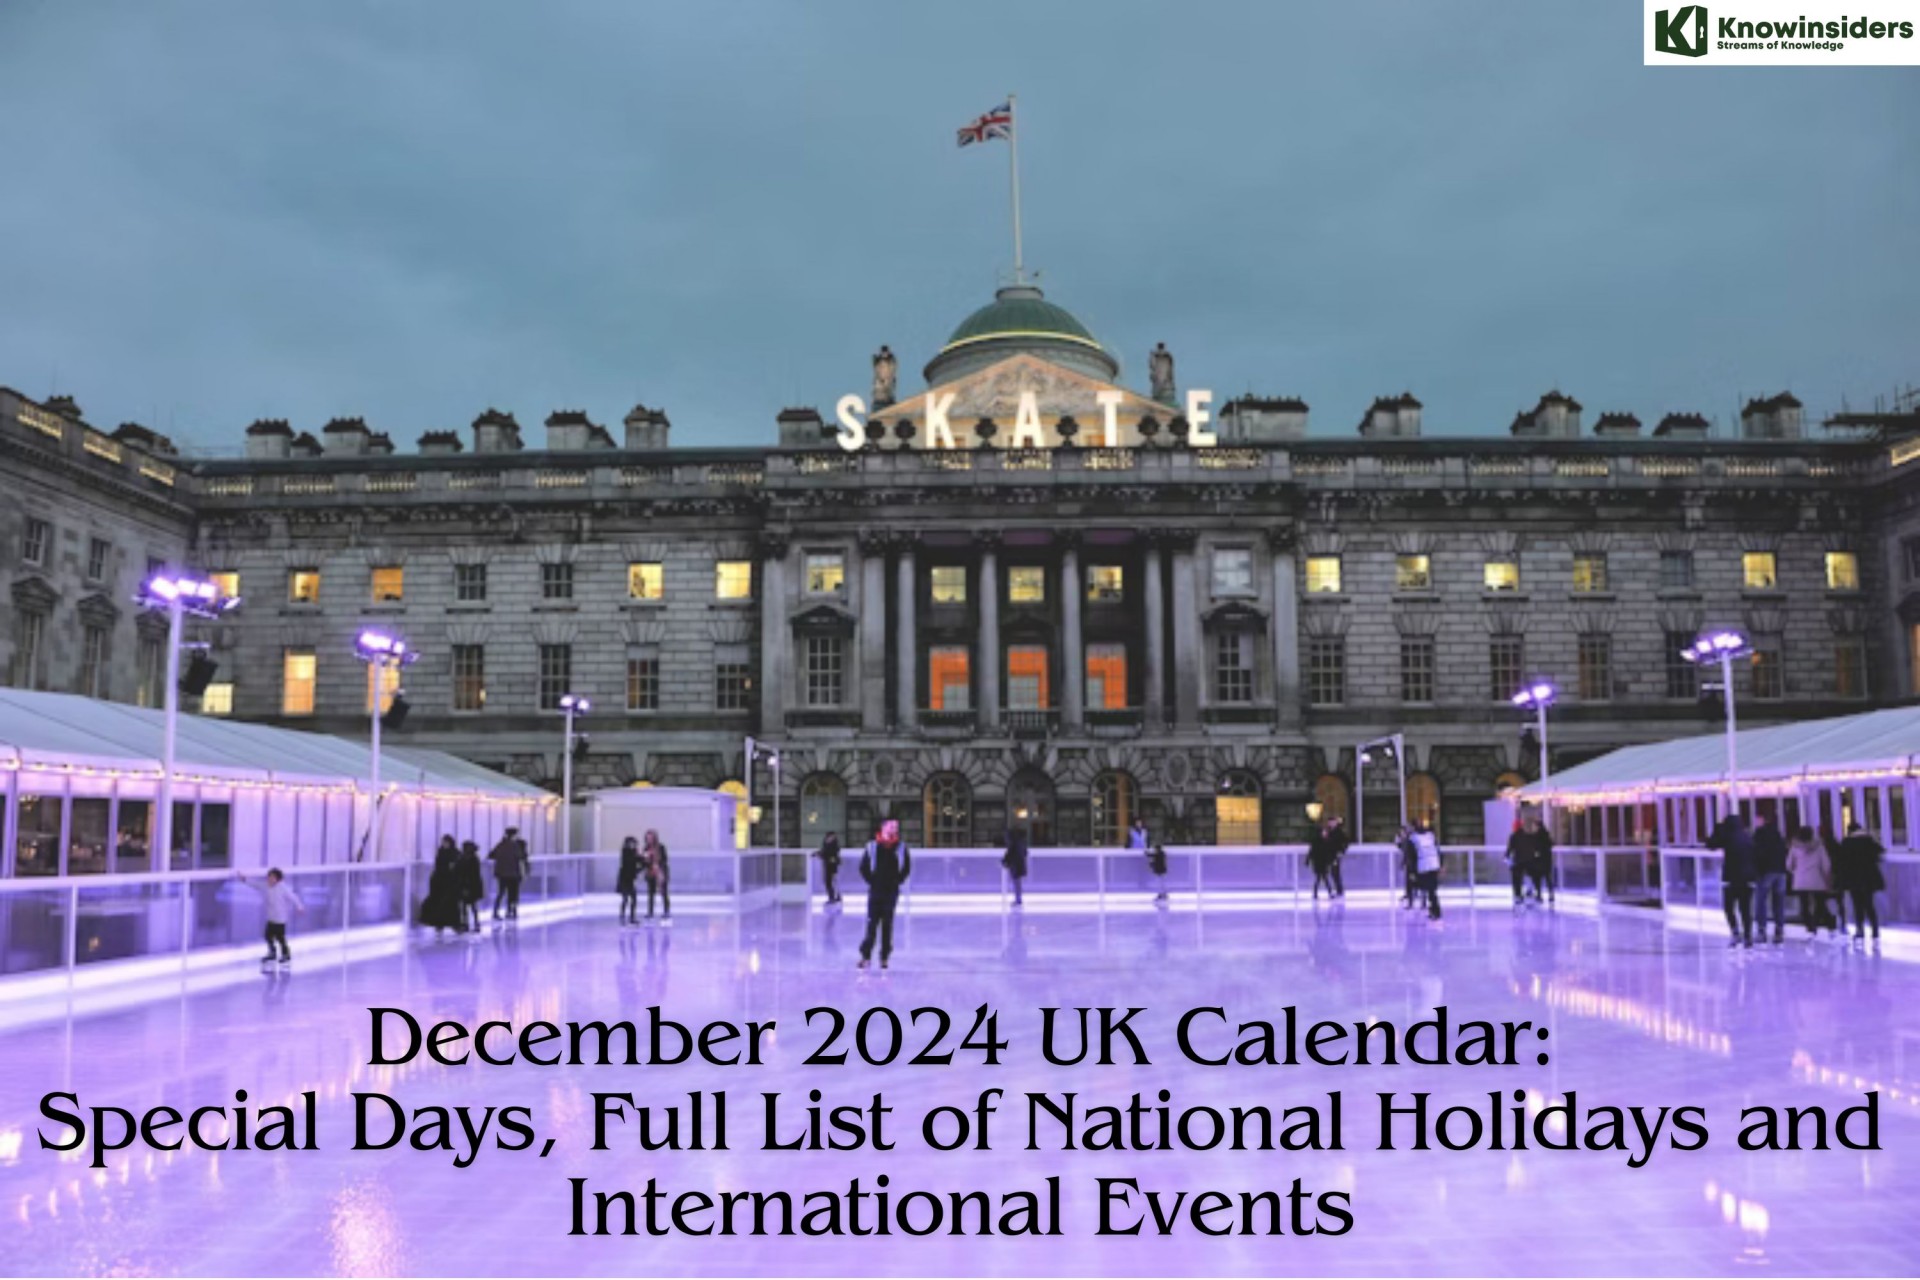 December 2024 UK Calendar: Special Days, Full List of National Holidays and International Events